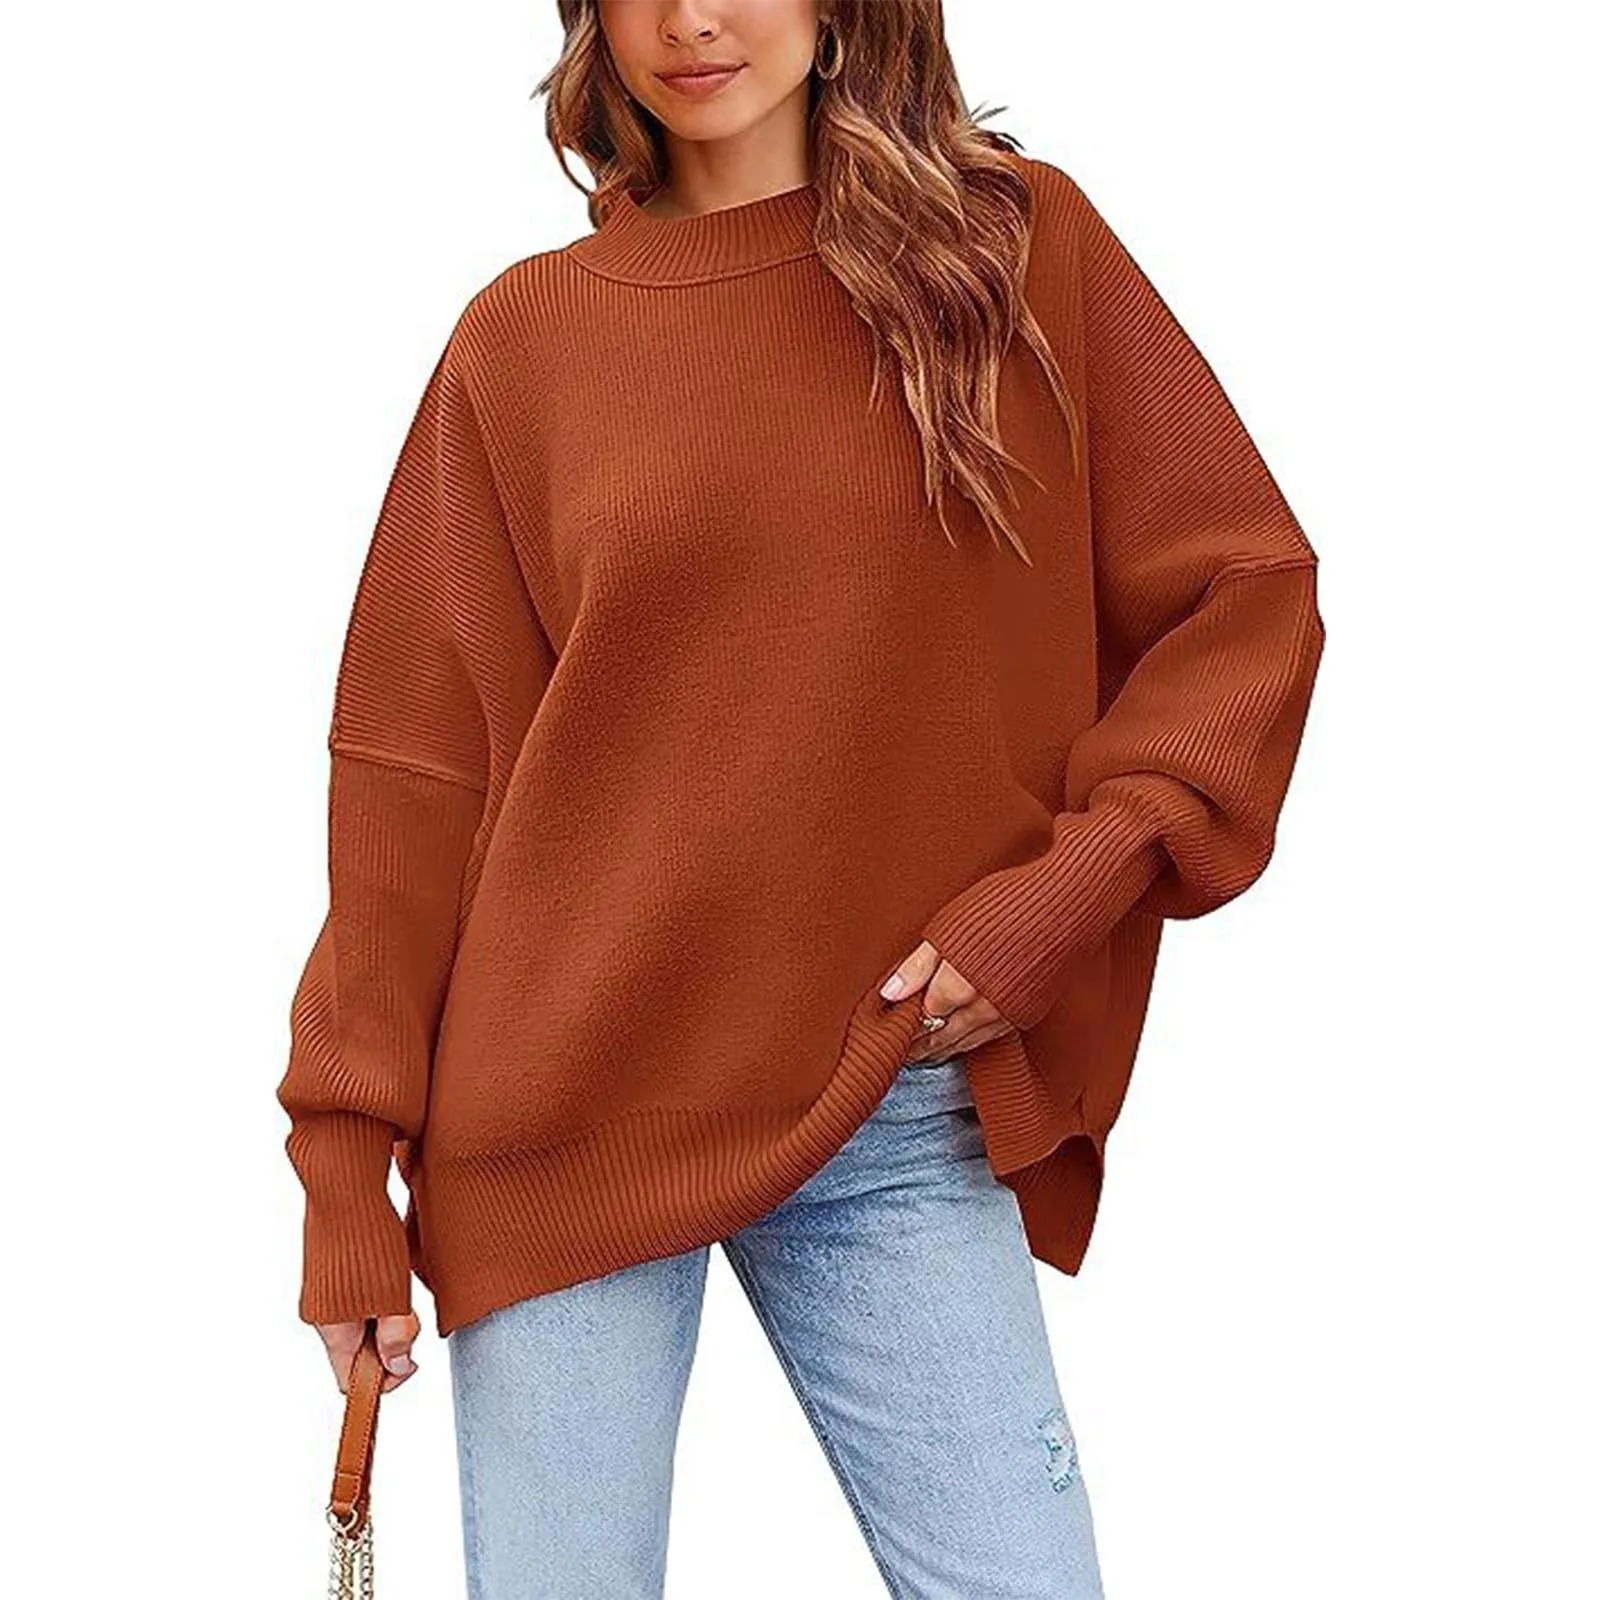 

Women'S Long Sleeve Knit Sweater Jumper Turtleneck Fall Autumn Winter Hoodies Y2k Knit Thick Warm Plush Sweatshirt кофта женская